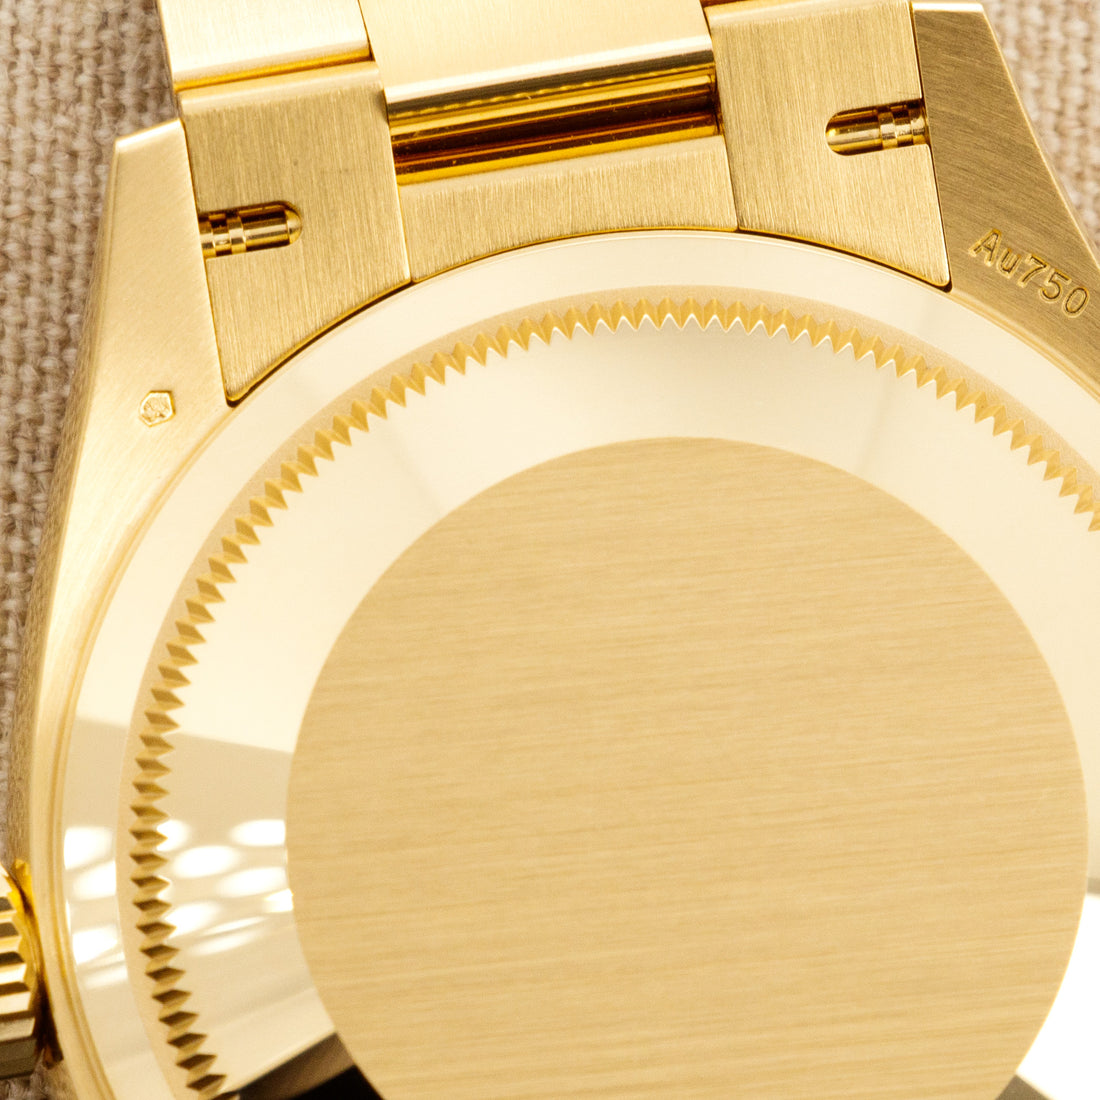 Rolex Yellow Gold Day-Date Rainbow Watch Ref. 128238